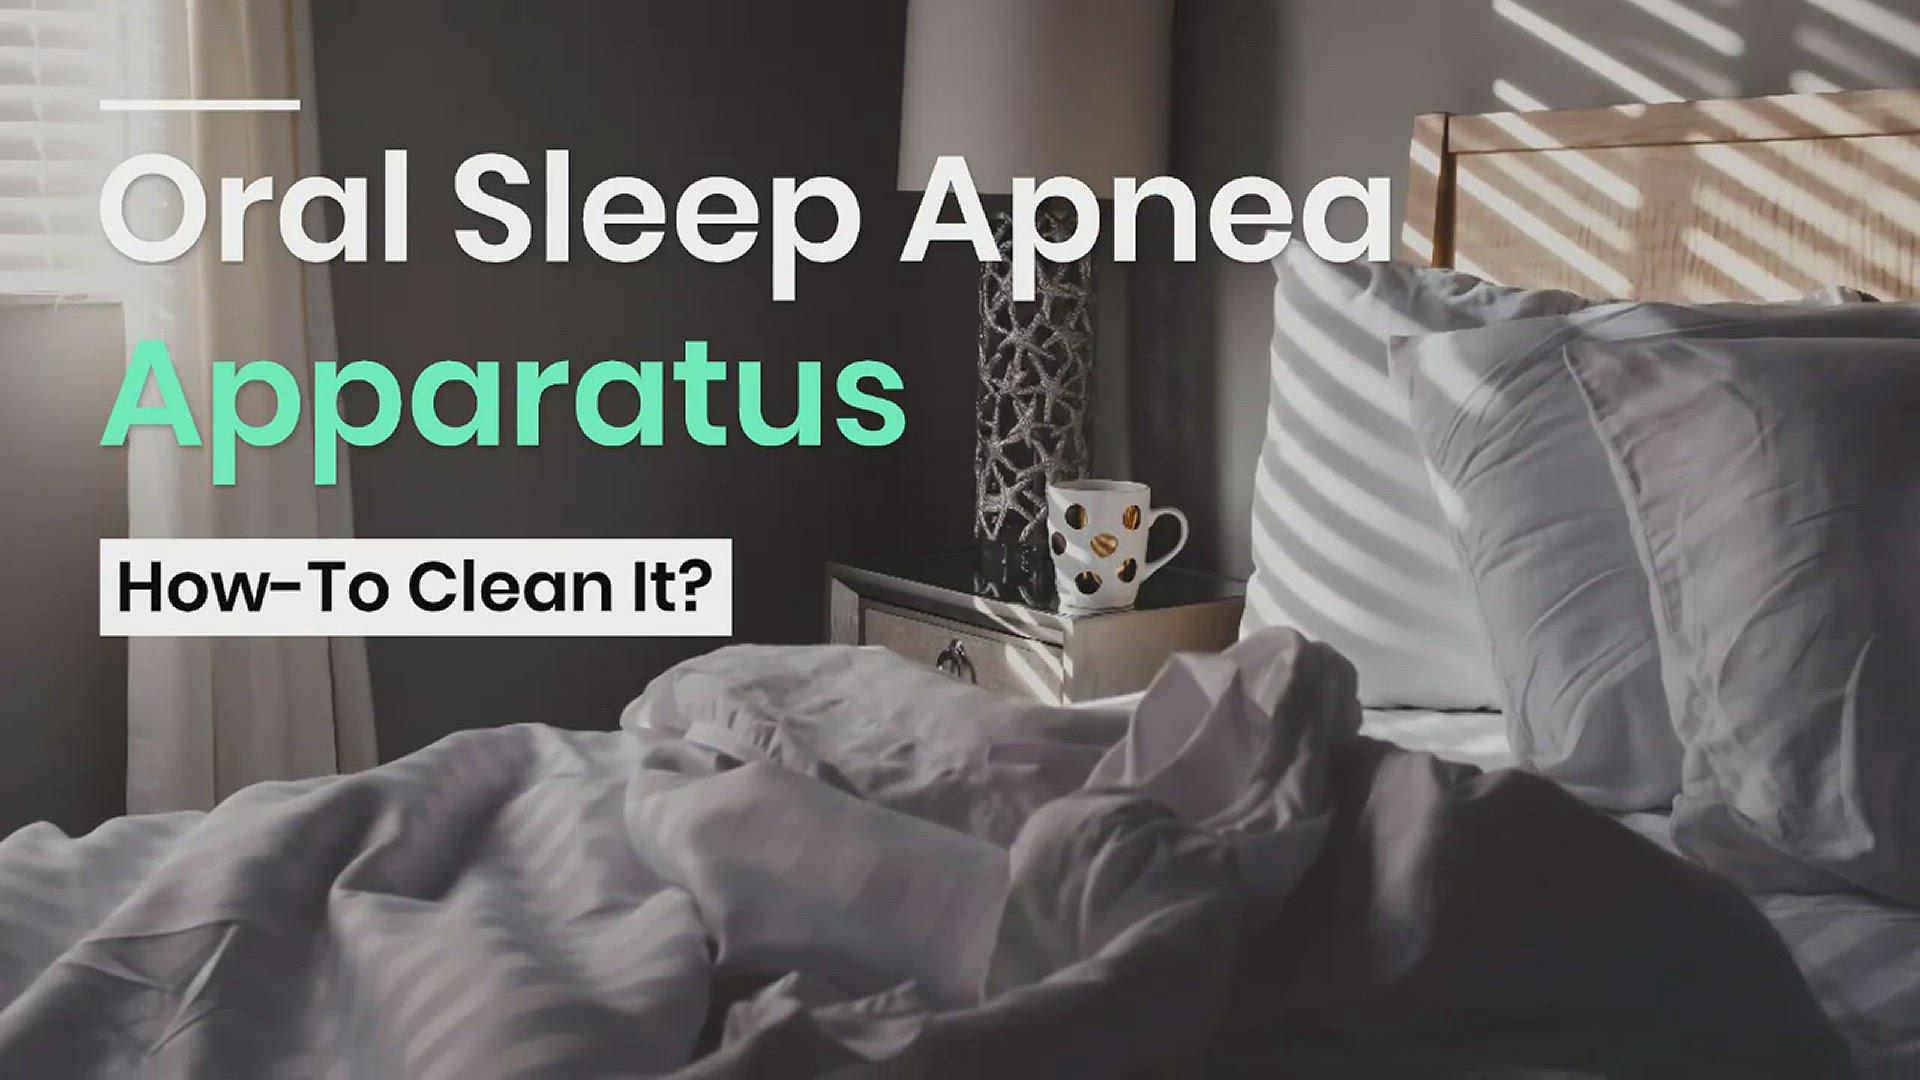 'Video thumbnail for Oral Sleep Apnea Apparatus How-To Clean It?'